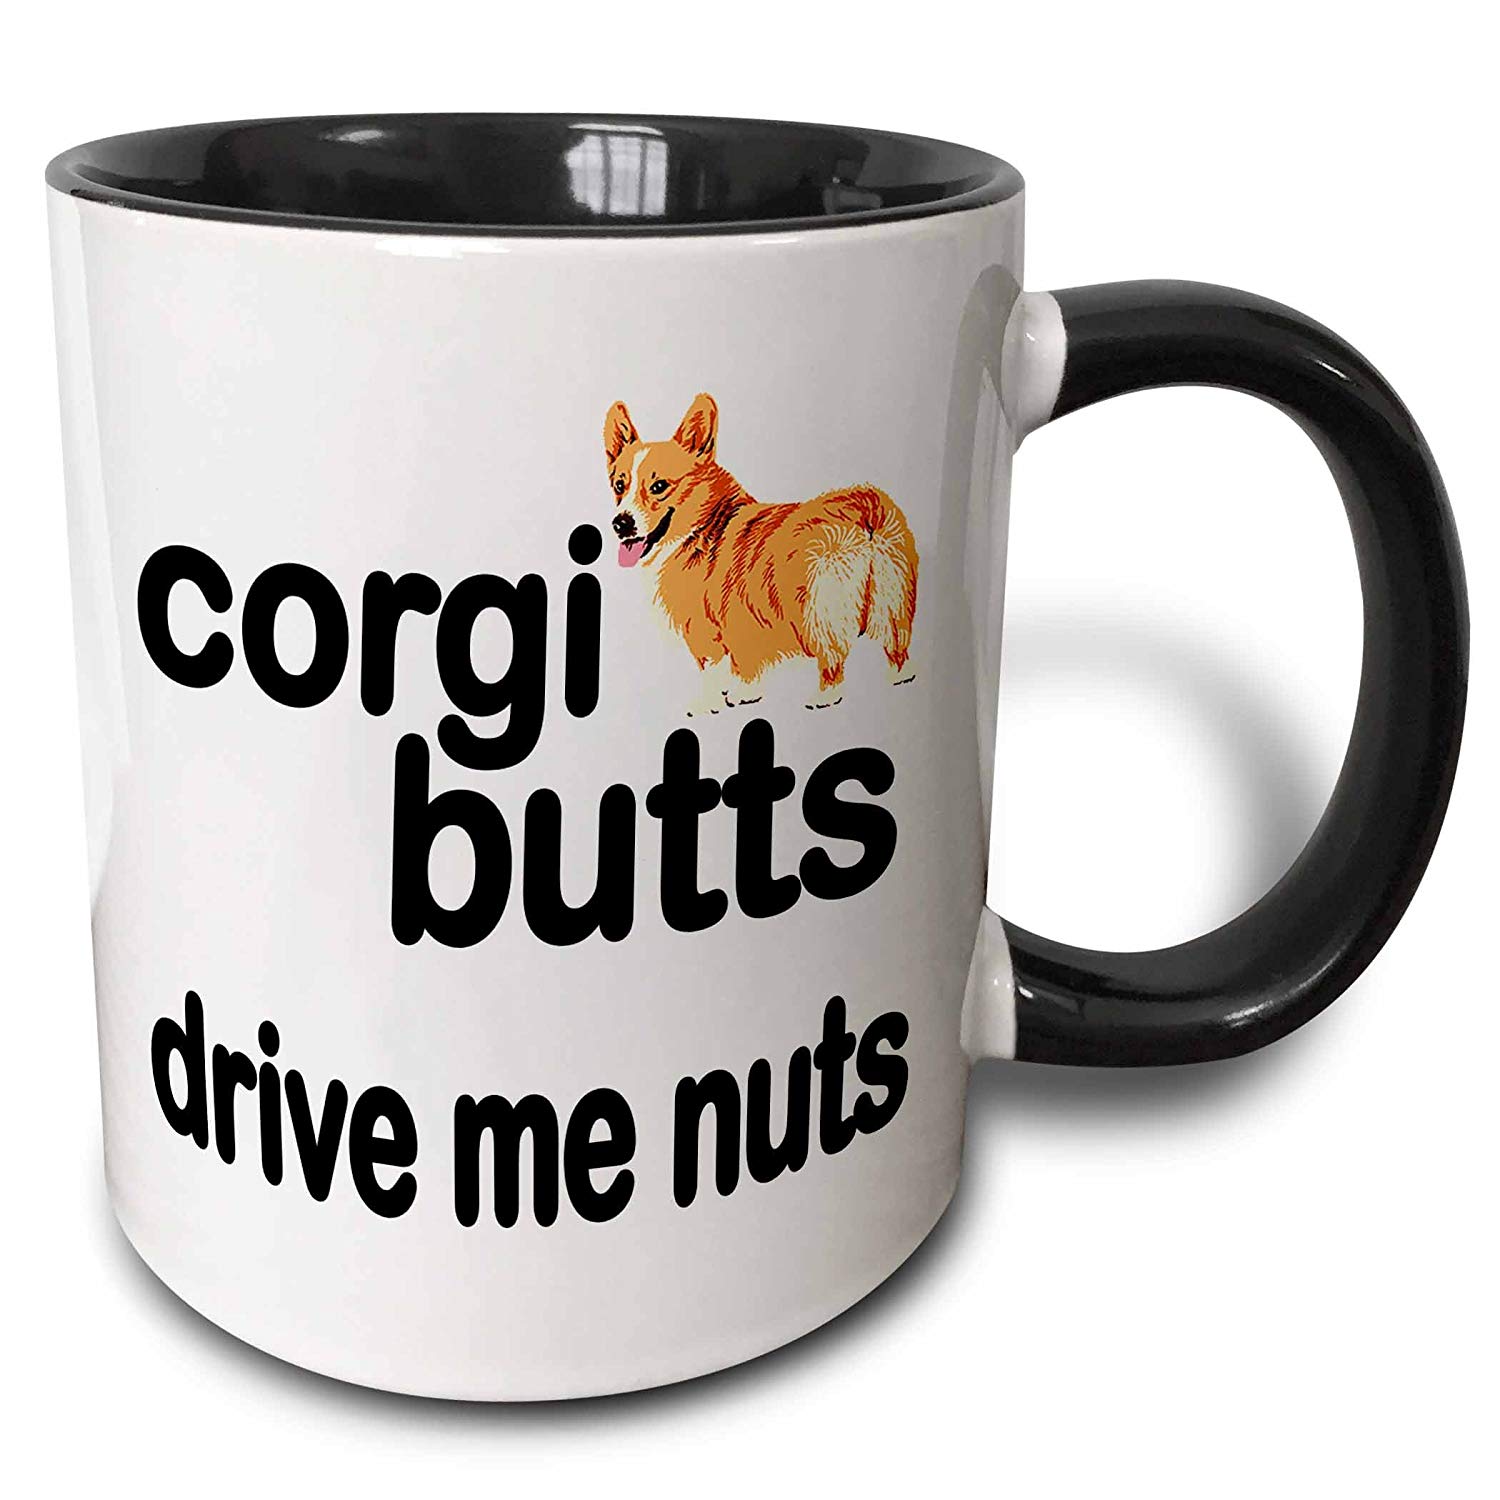 A coffee mug printed with a photos of a corgi and quote - Corgi butts drive me nuts 